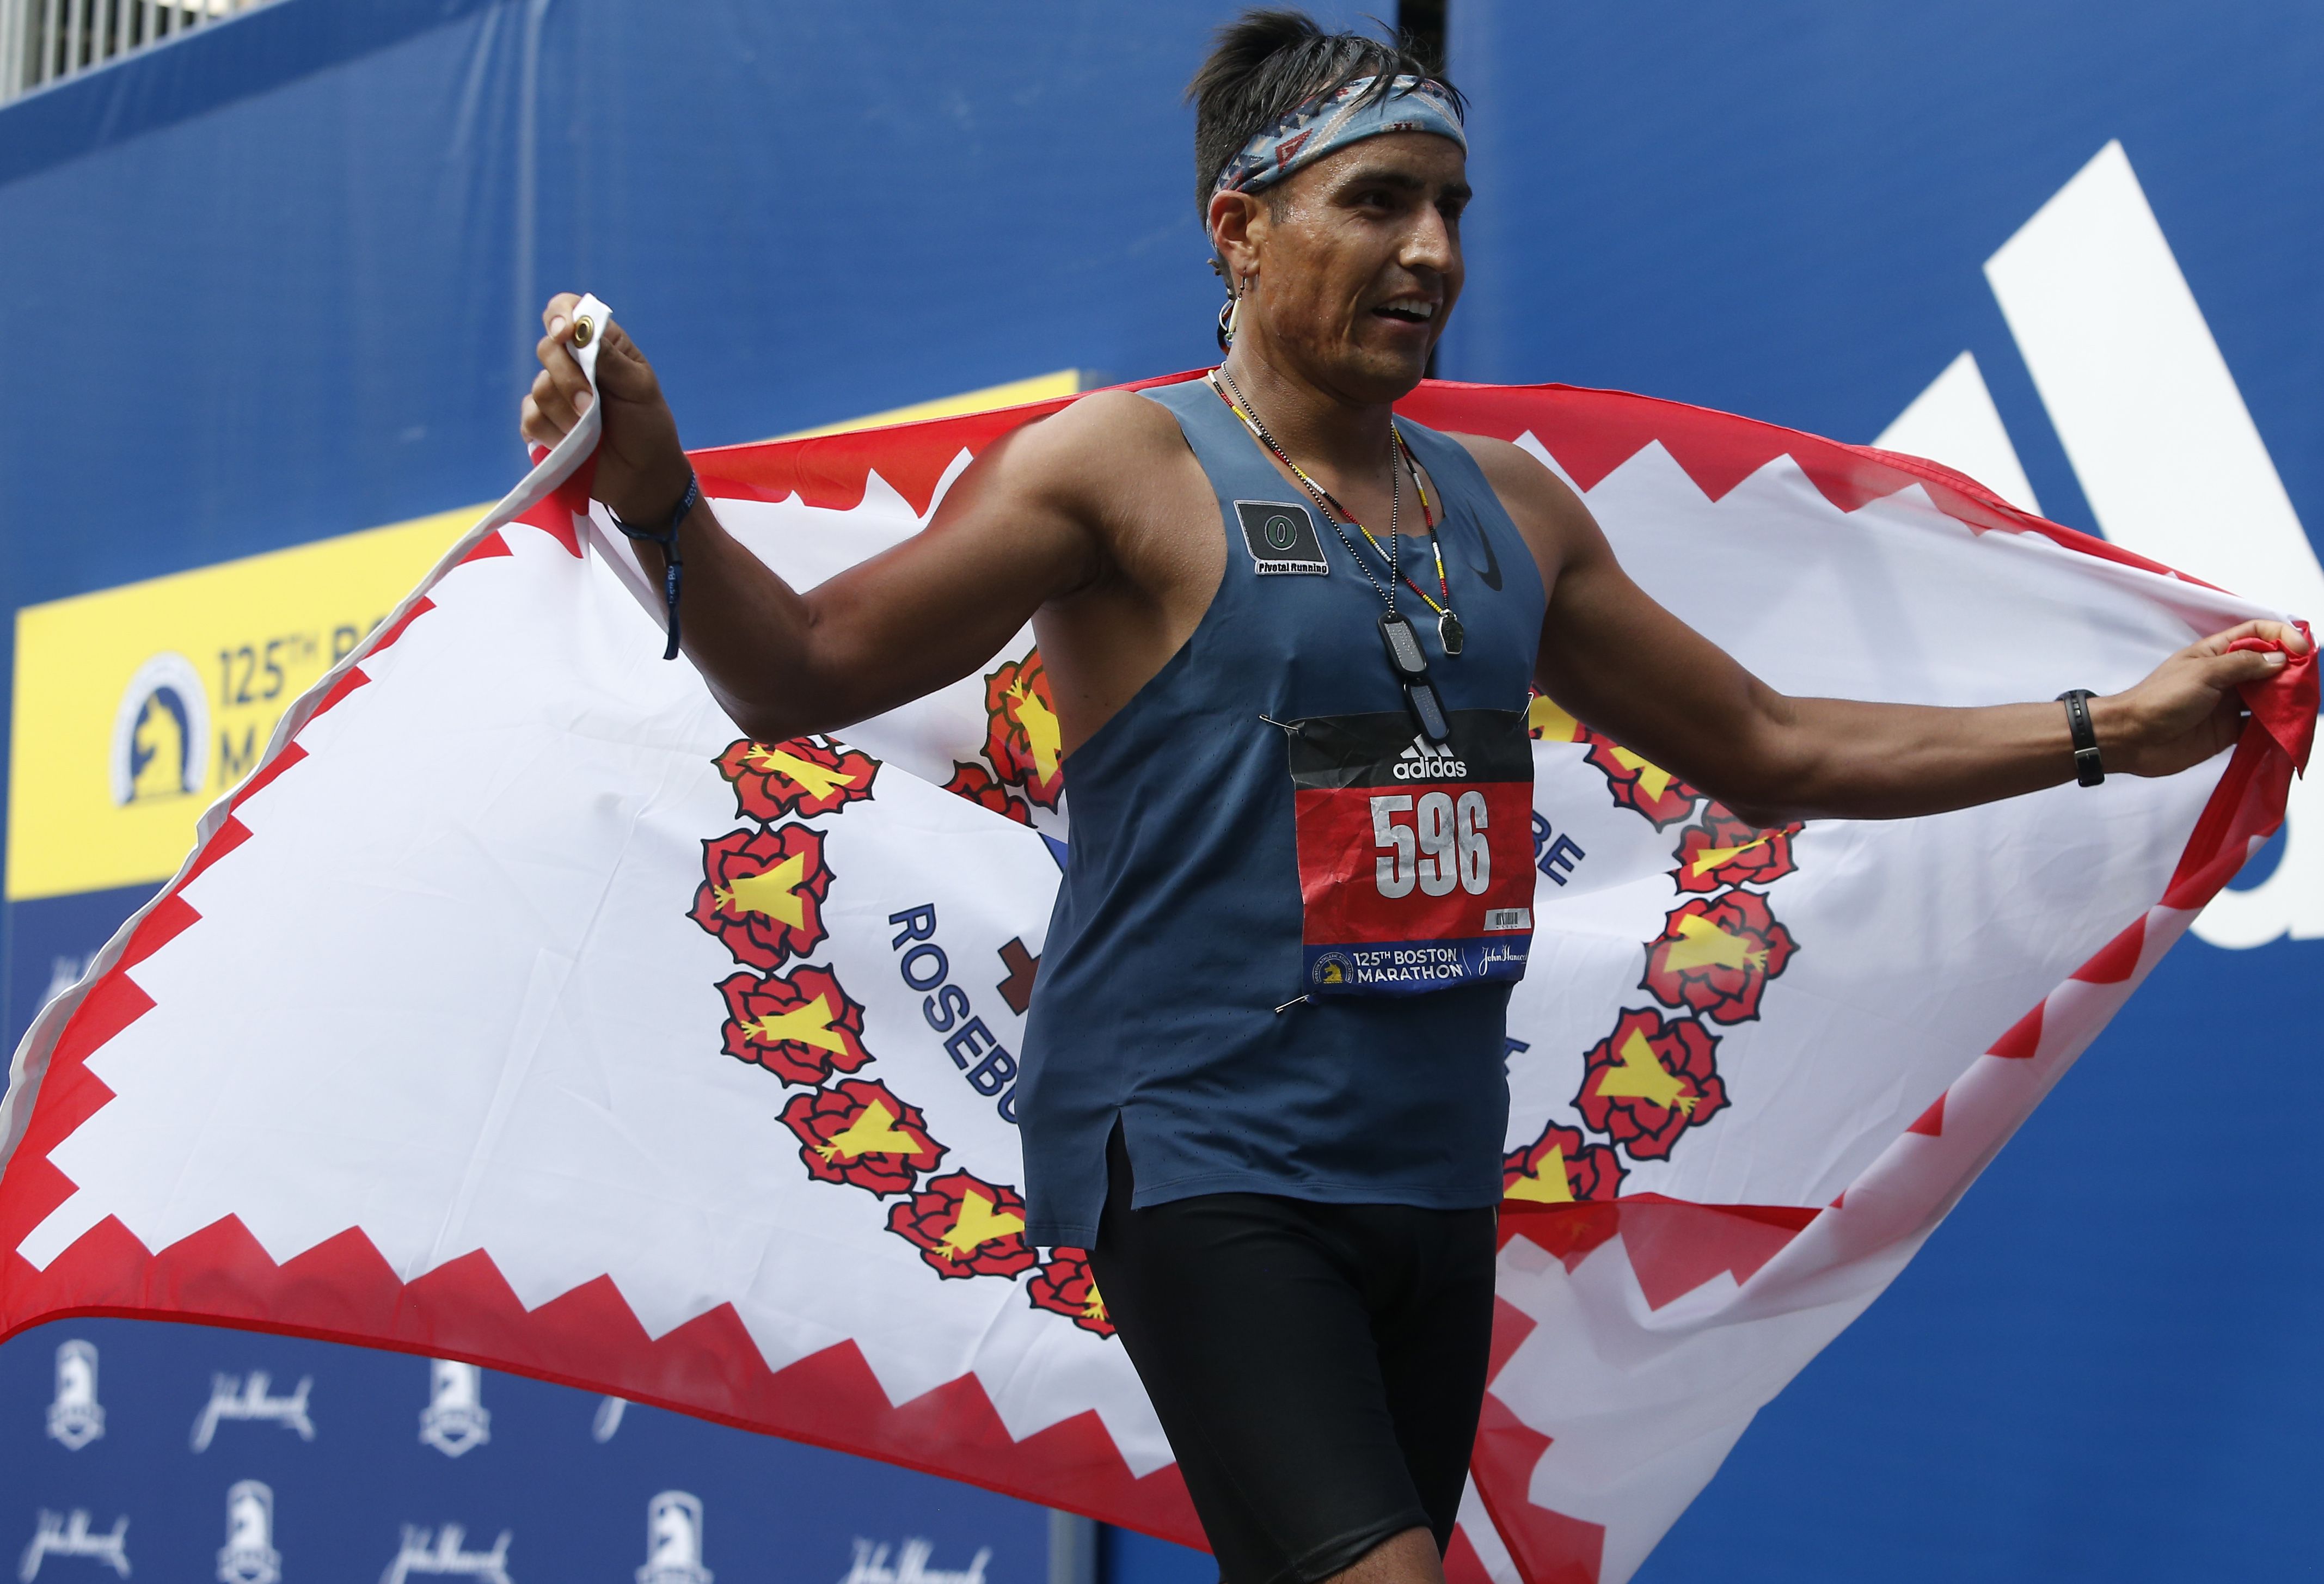 Marathon runner holding an Indigenous flag behind him